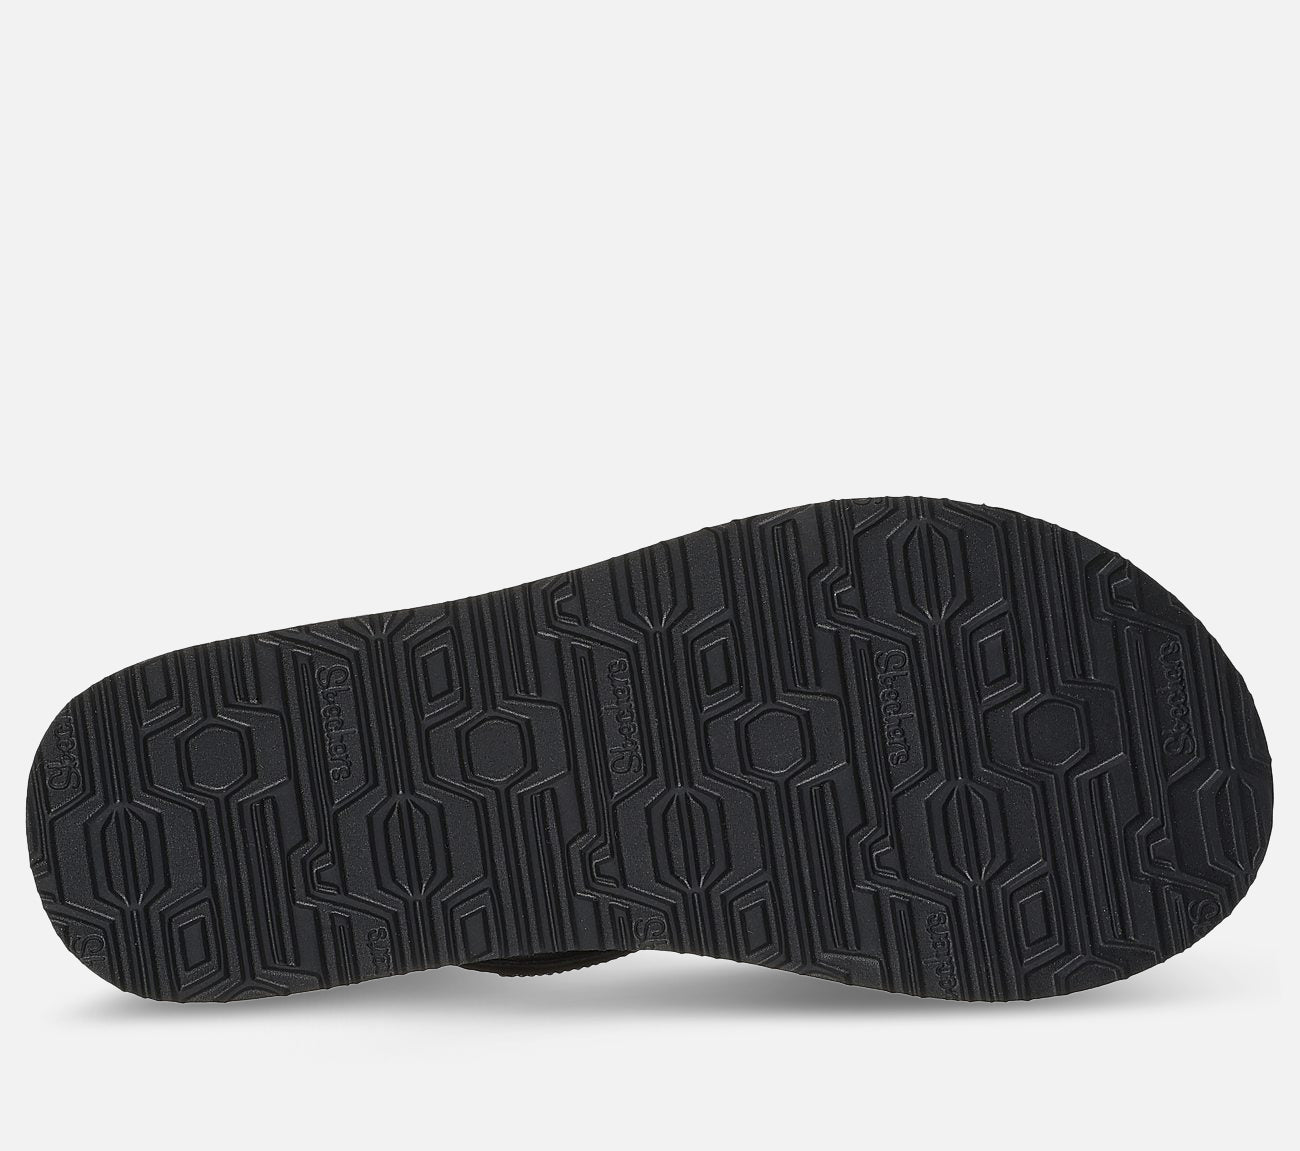 Meditation Sandal - Rockstar Sandal Skechers